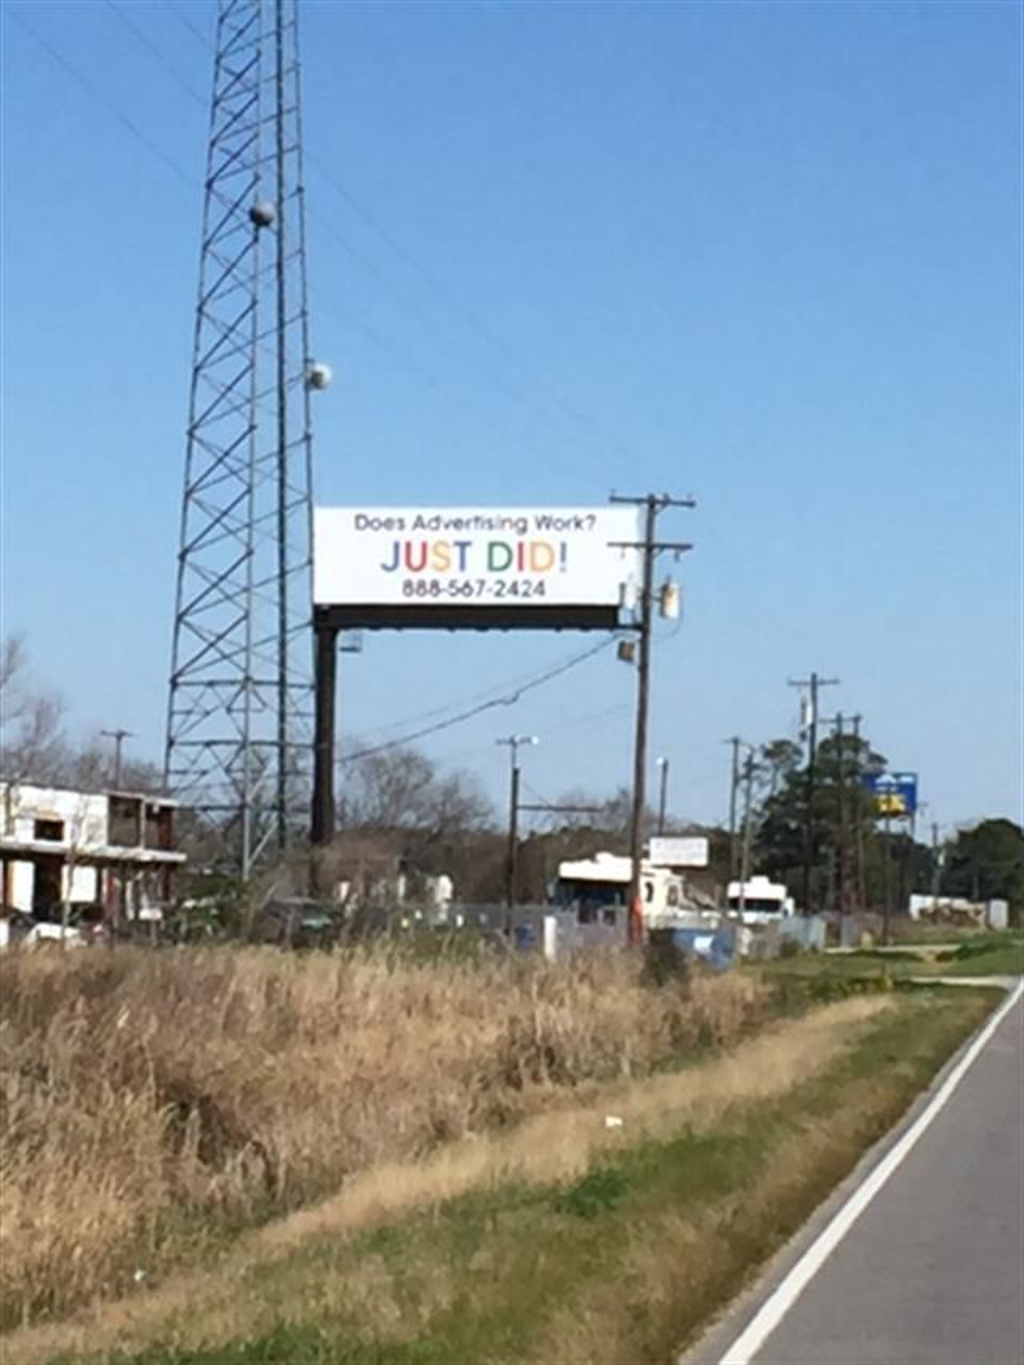 Photo of a billboard in Estherwood